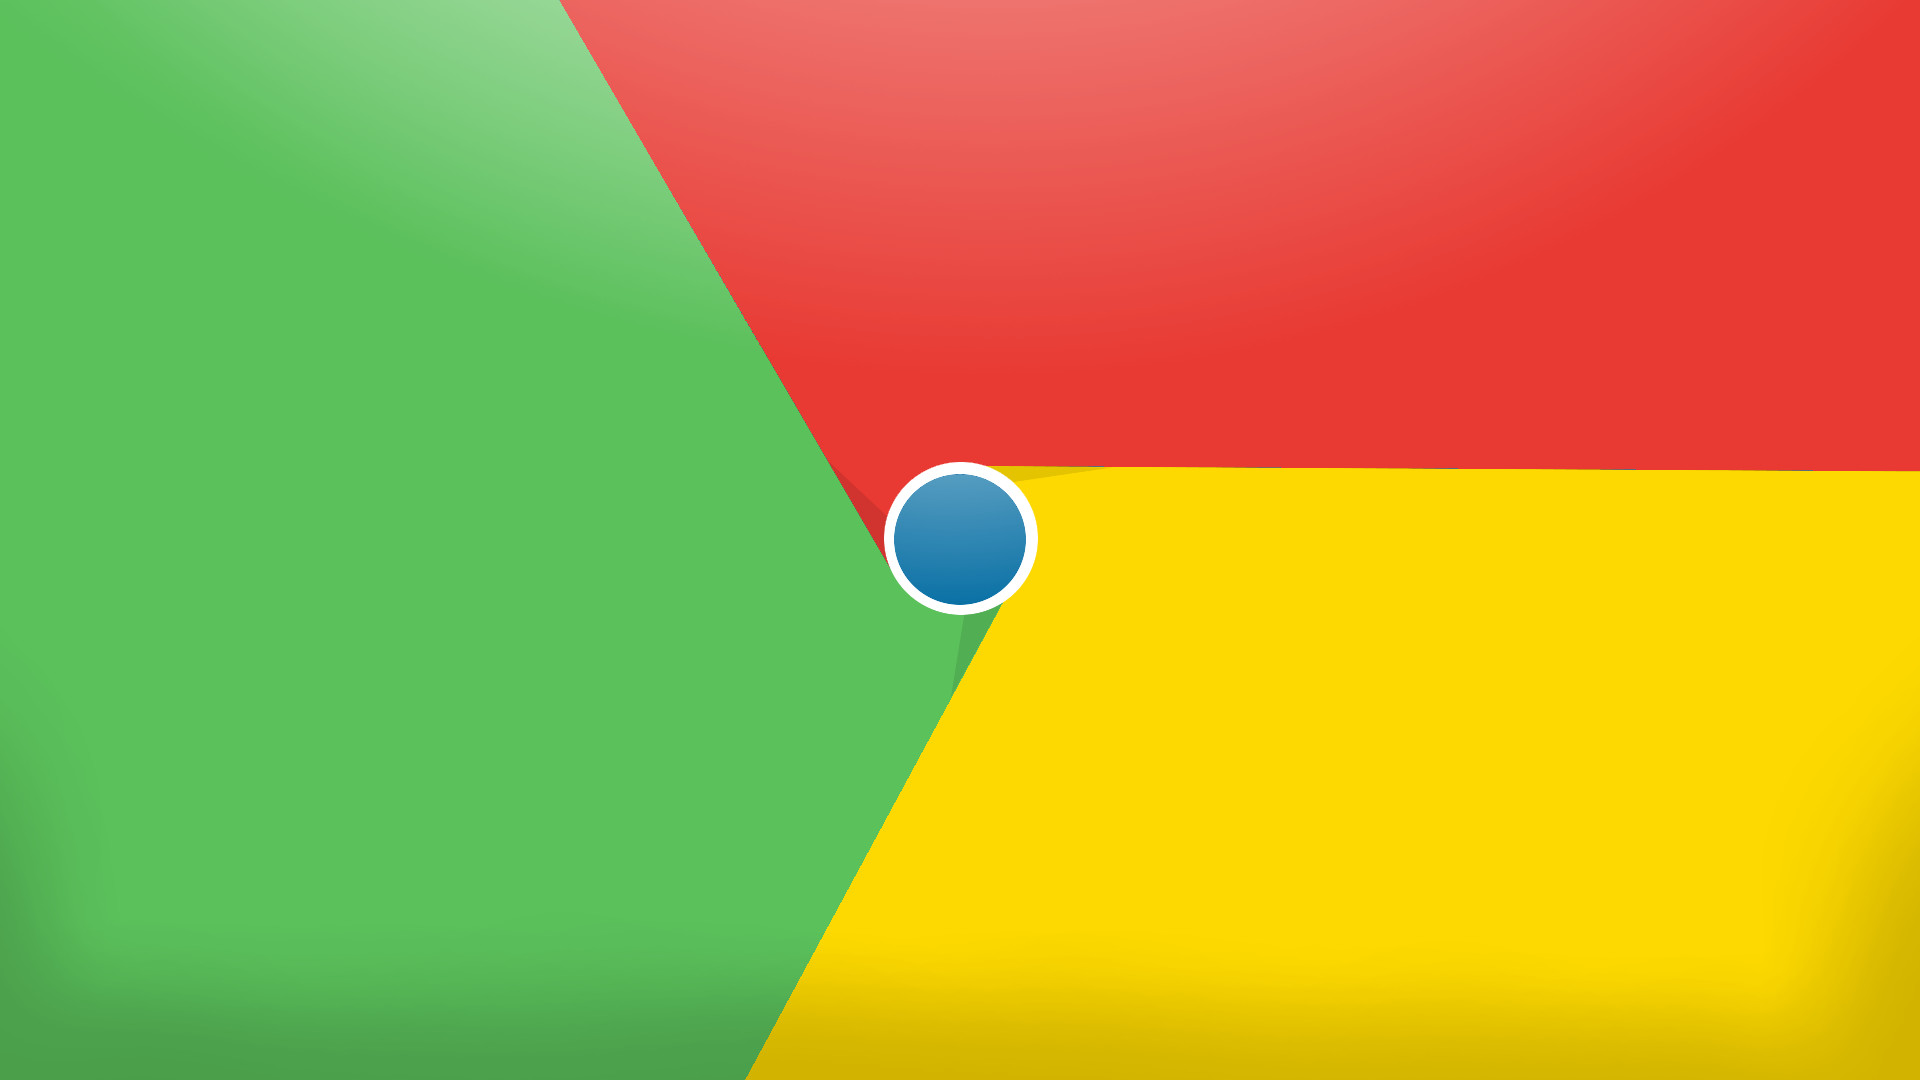 Google Wallpaper Background Image